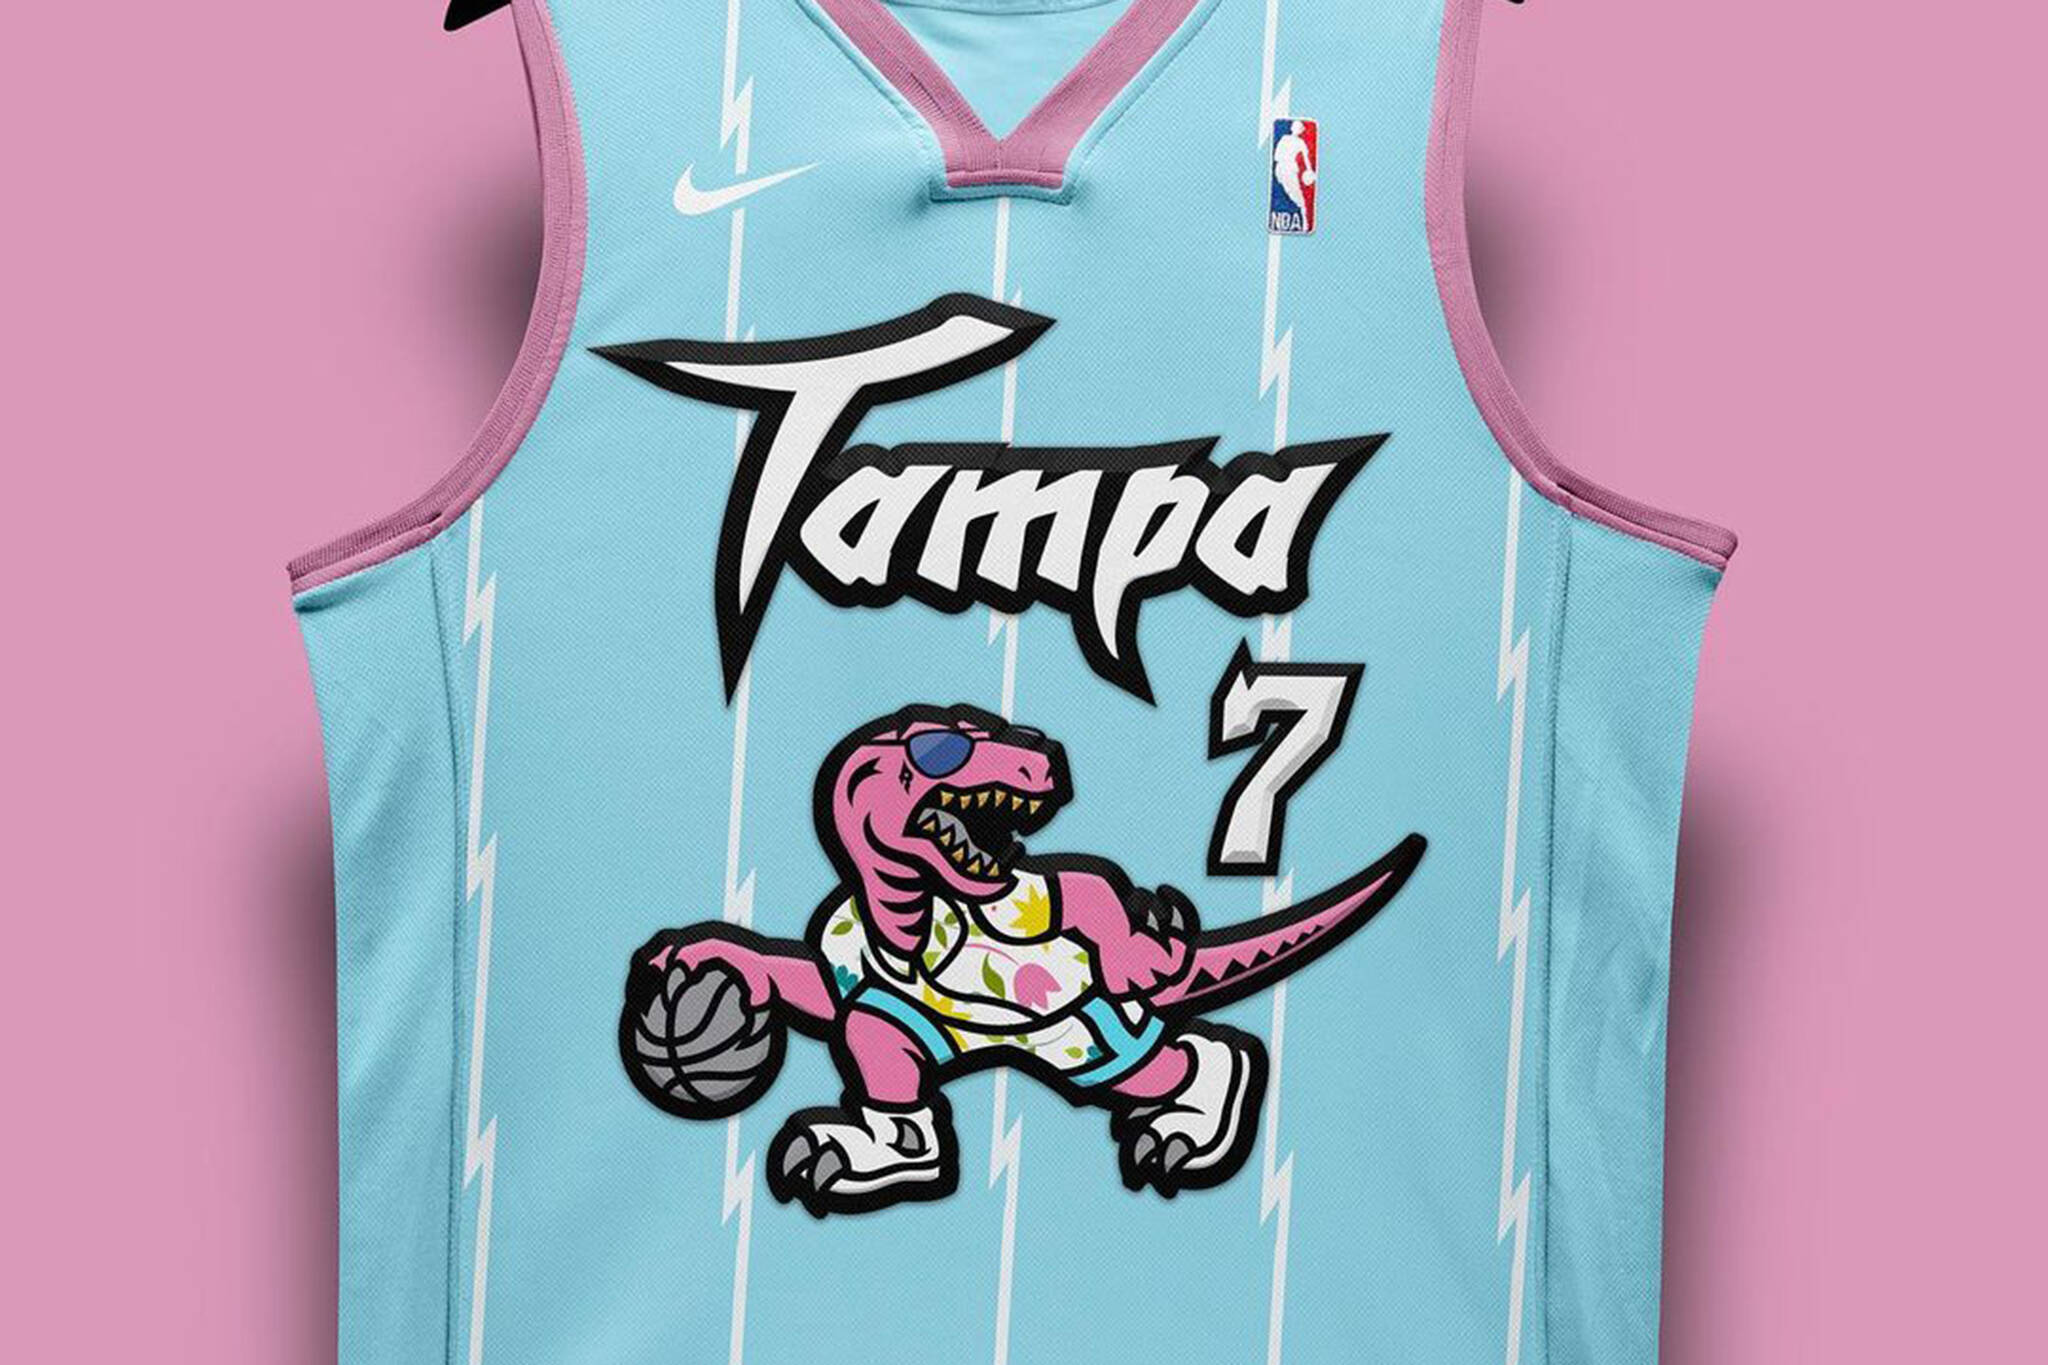 Custom Raptors x Tampa Jersey 😍 found a store : r/raptors